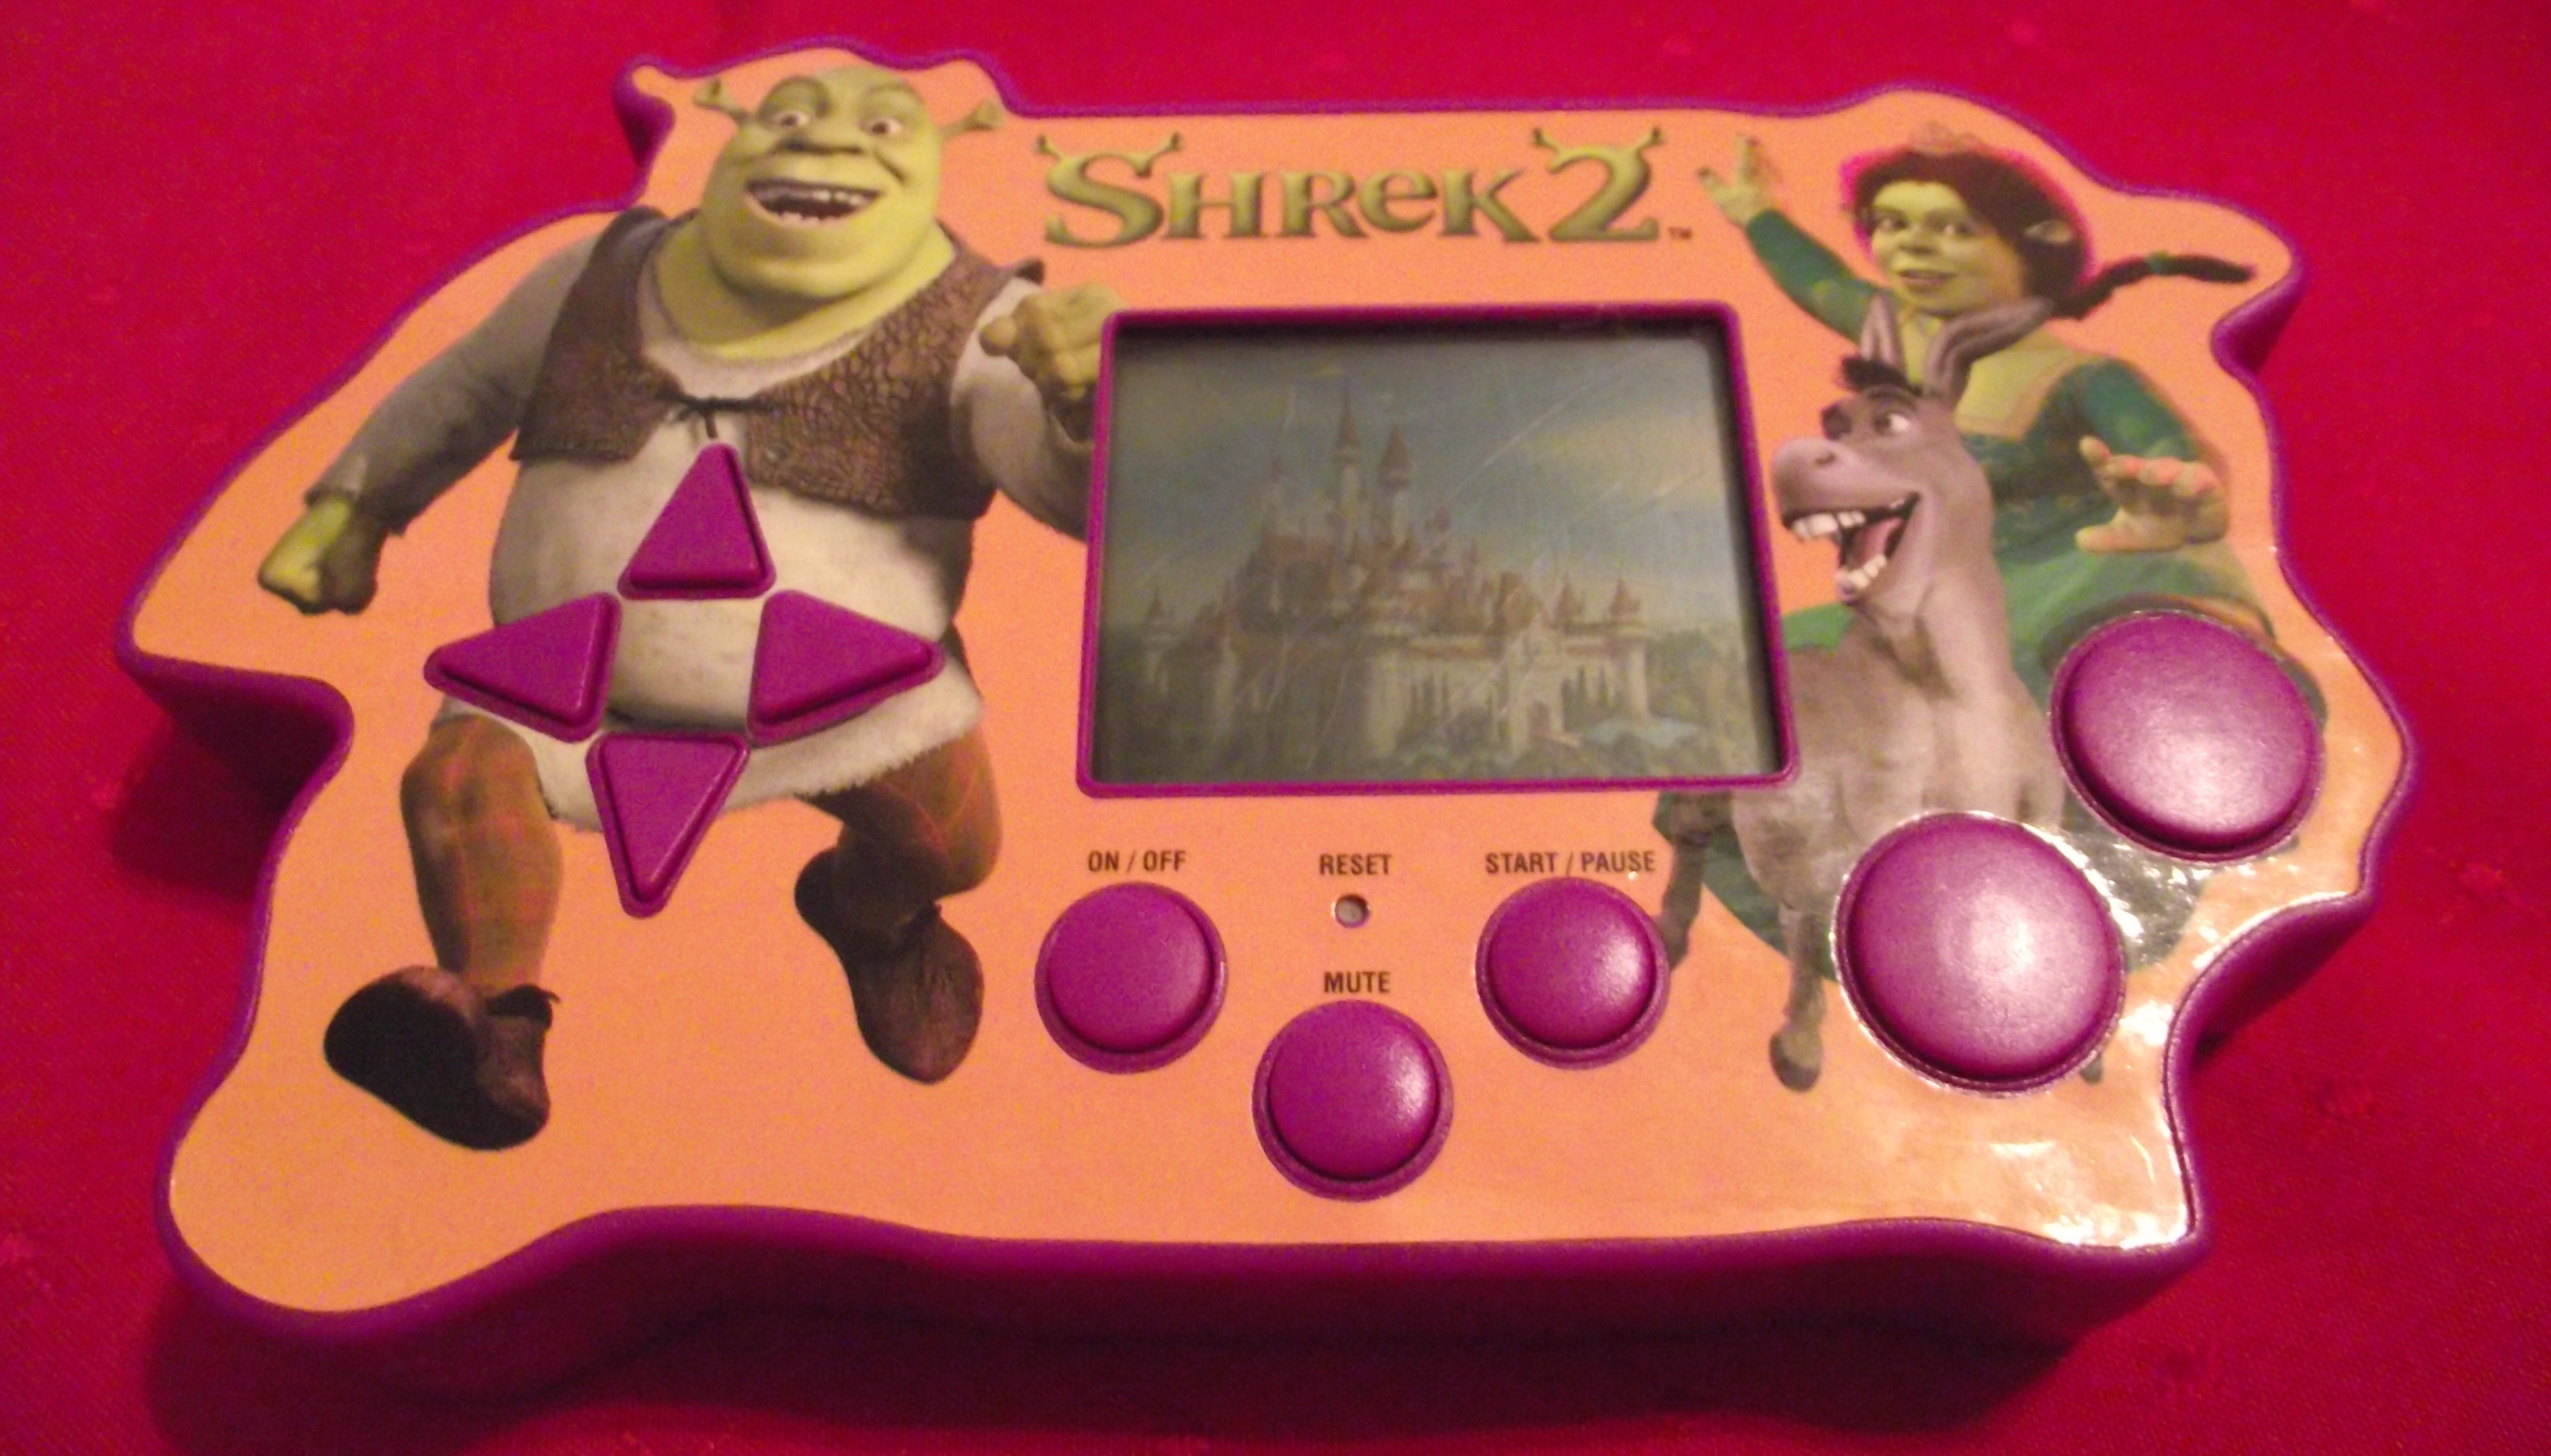 Shrek 2 Handheld Video Game